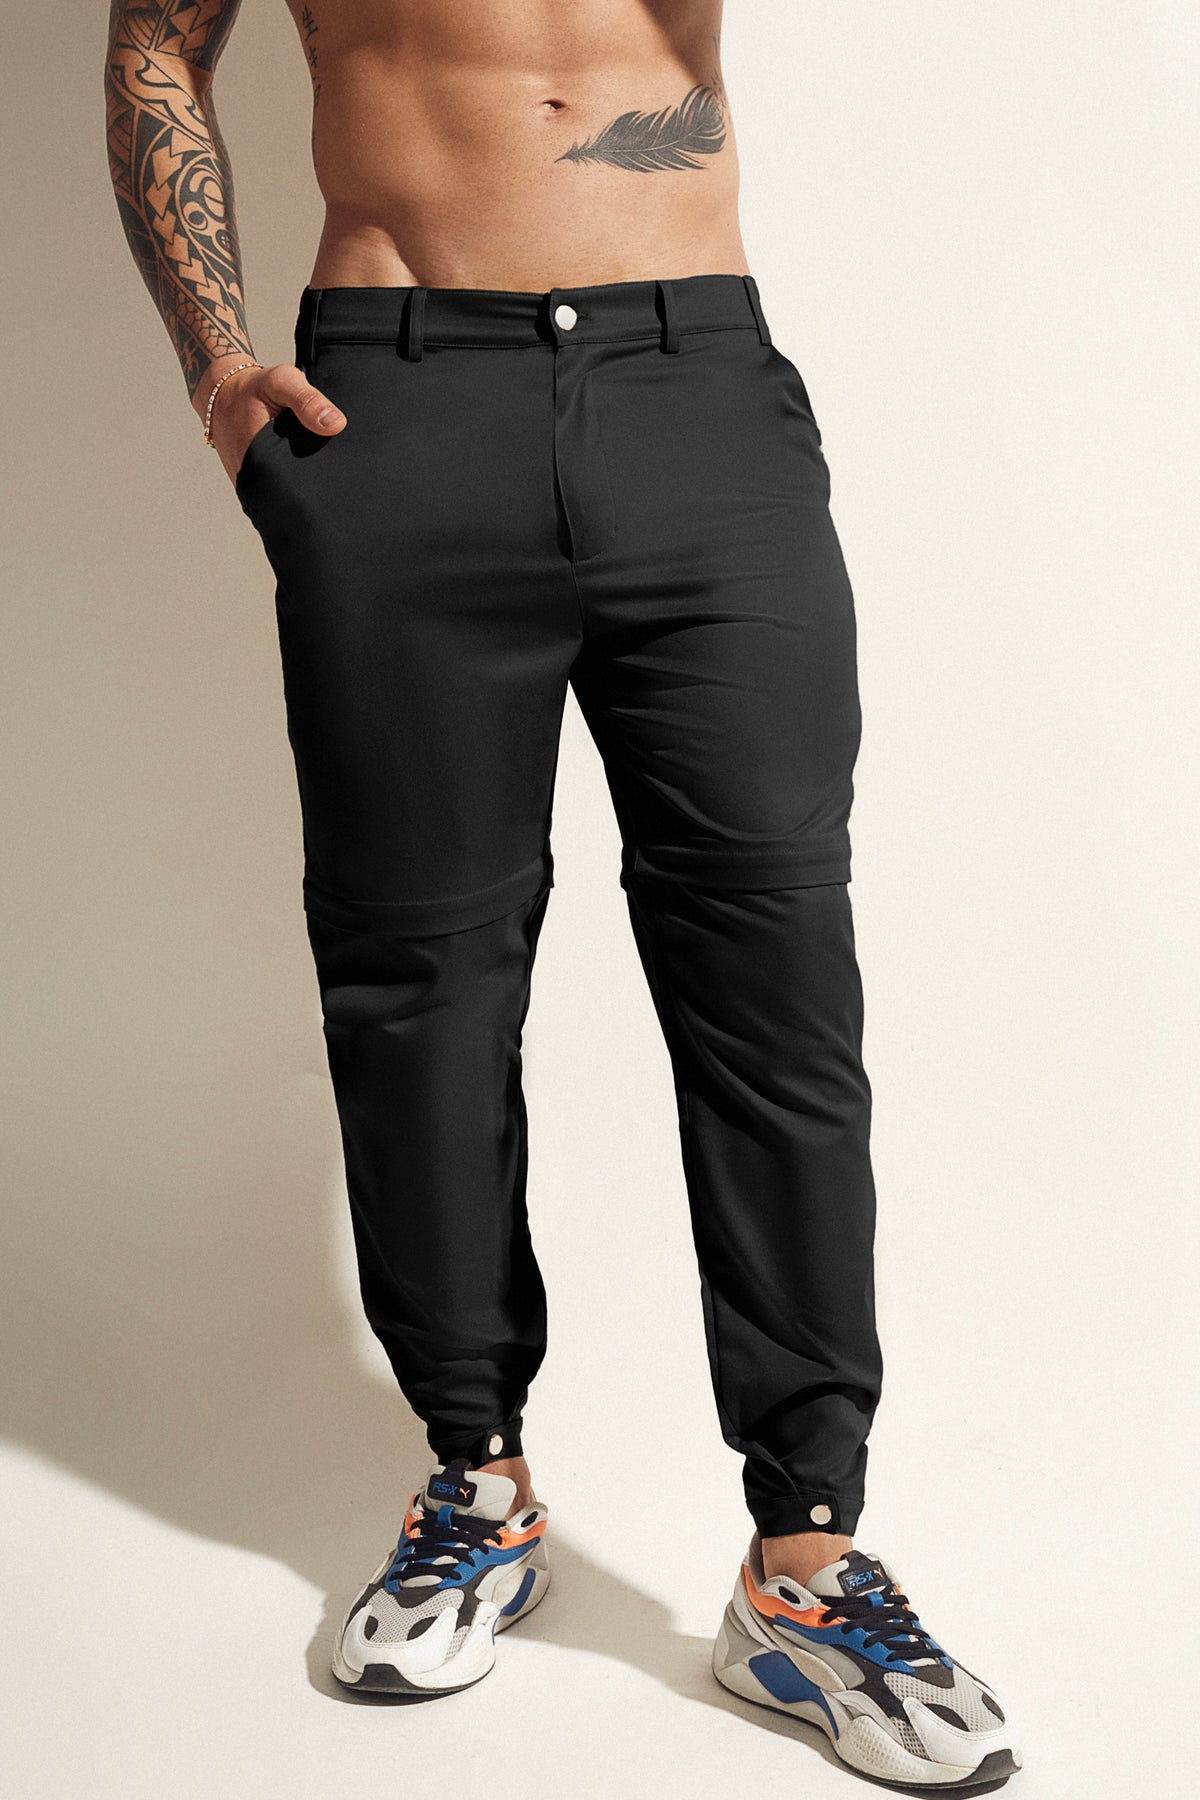 Black Convertible Trouser/ Short